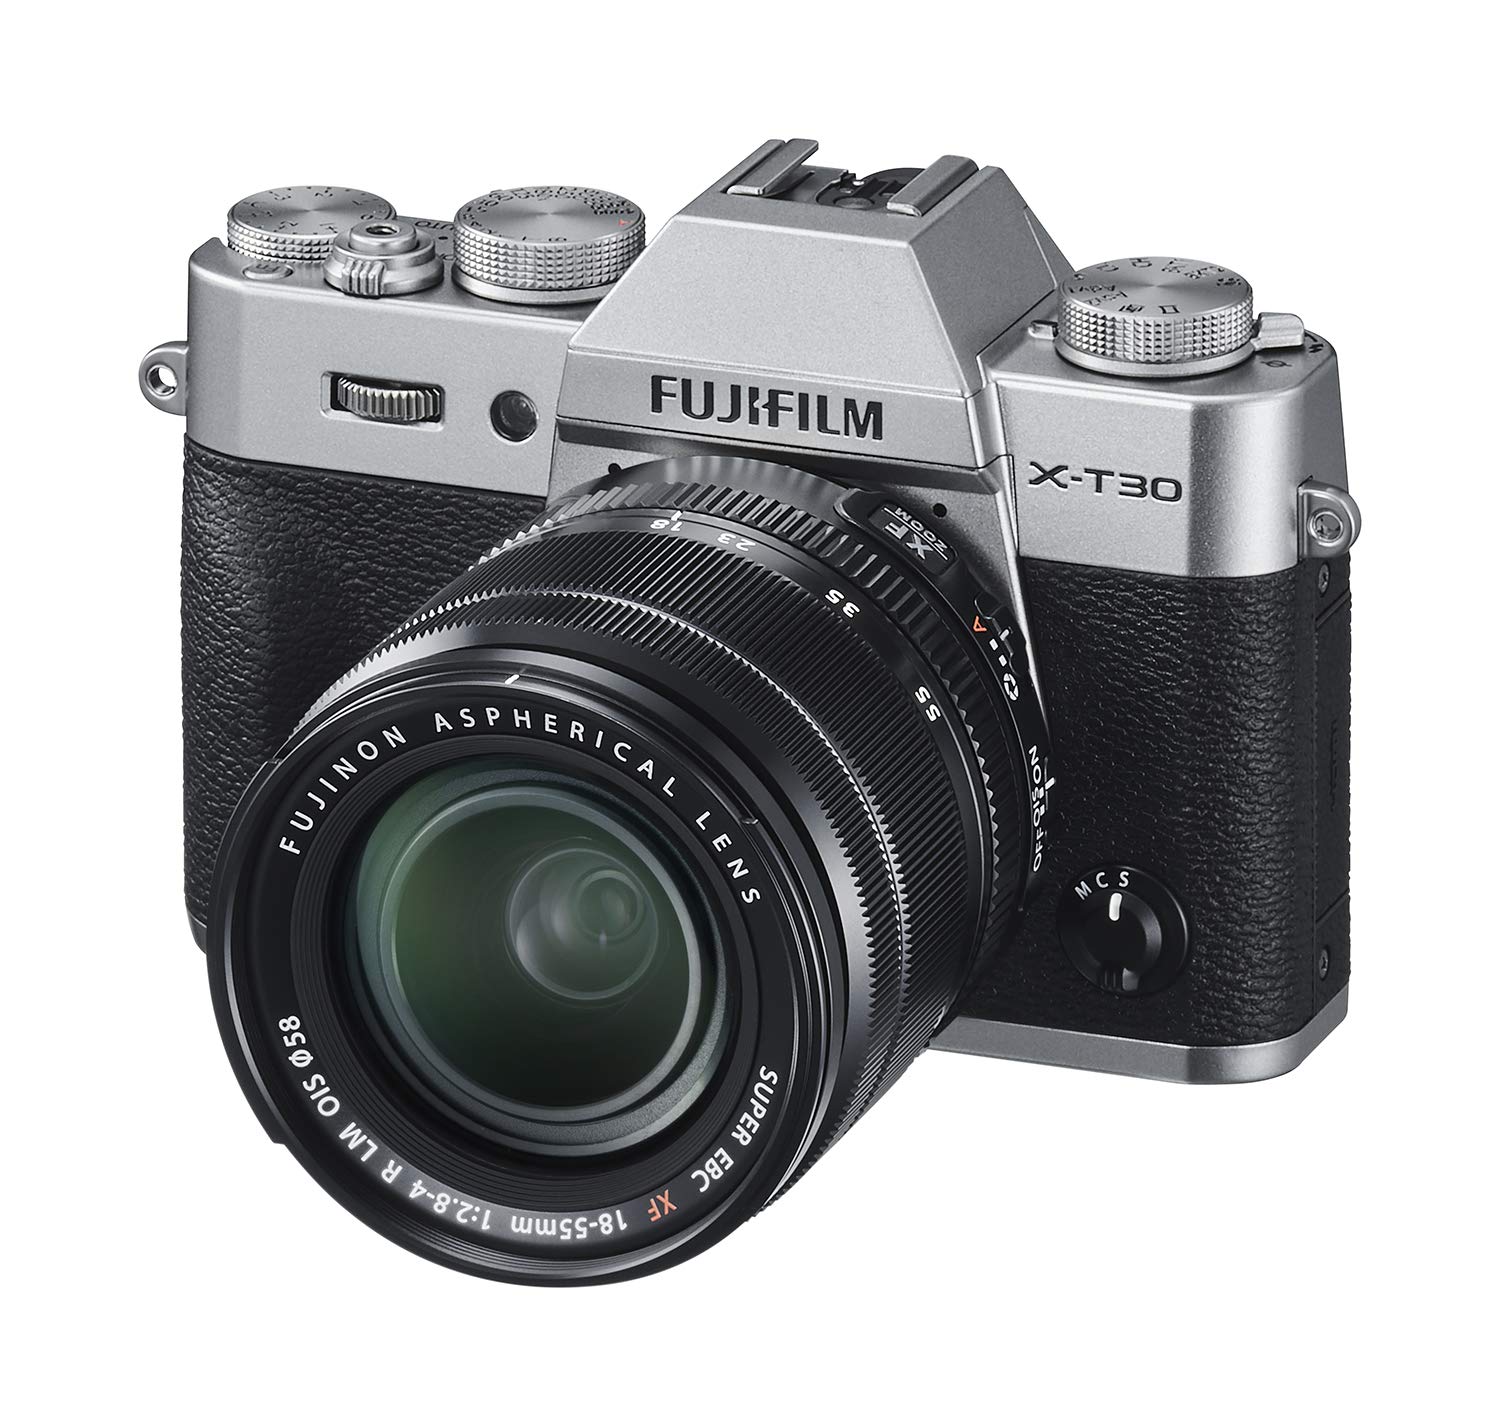 Fujifilm X-T30 Mirrorless Camera with XF 18-55mm f/2.8-4 R LM OIS Lens - Silver